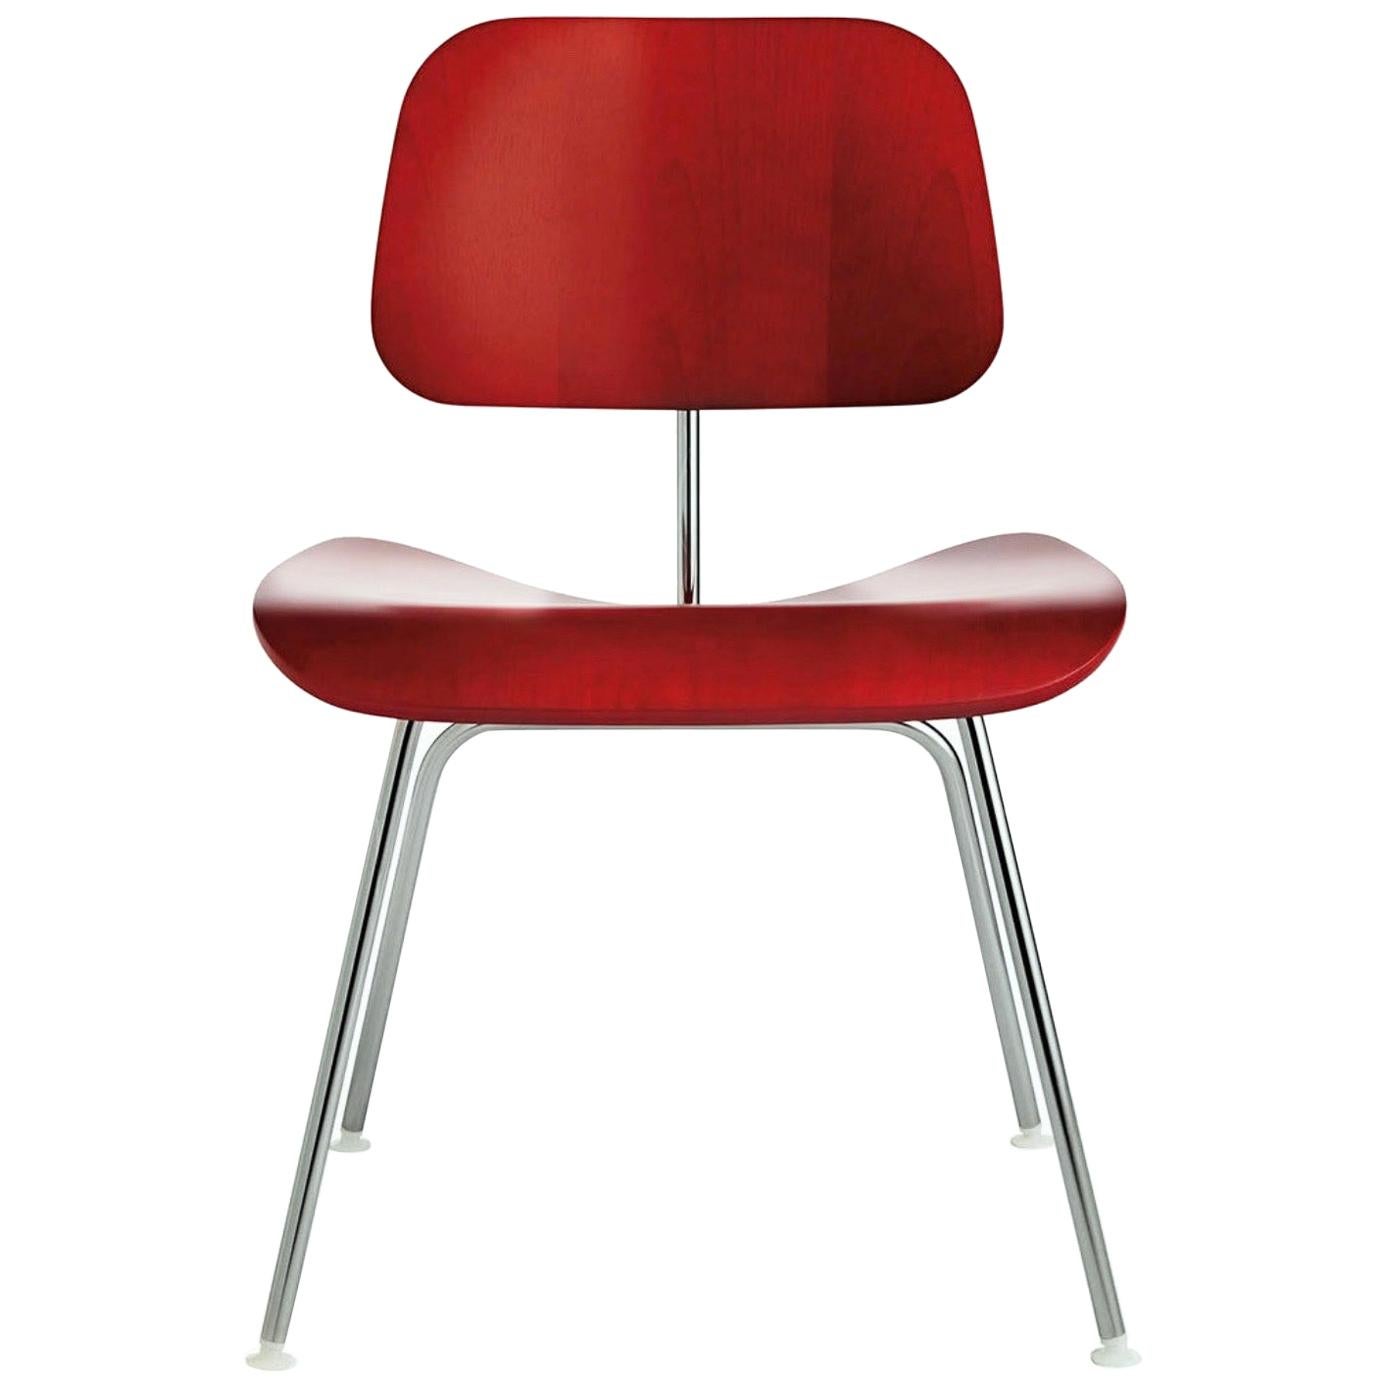 Charles and Ray Eames Red Beech DCM Chair, Herman Miller, Dining, Beistellstuhl (Edelstahl)